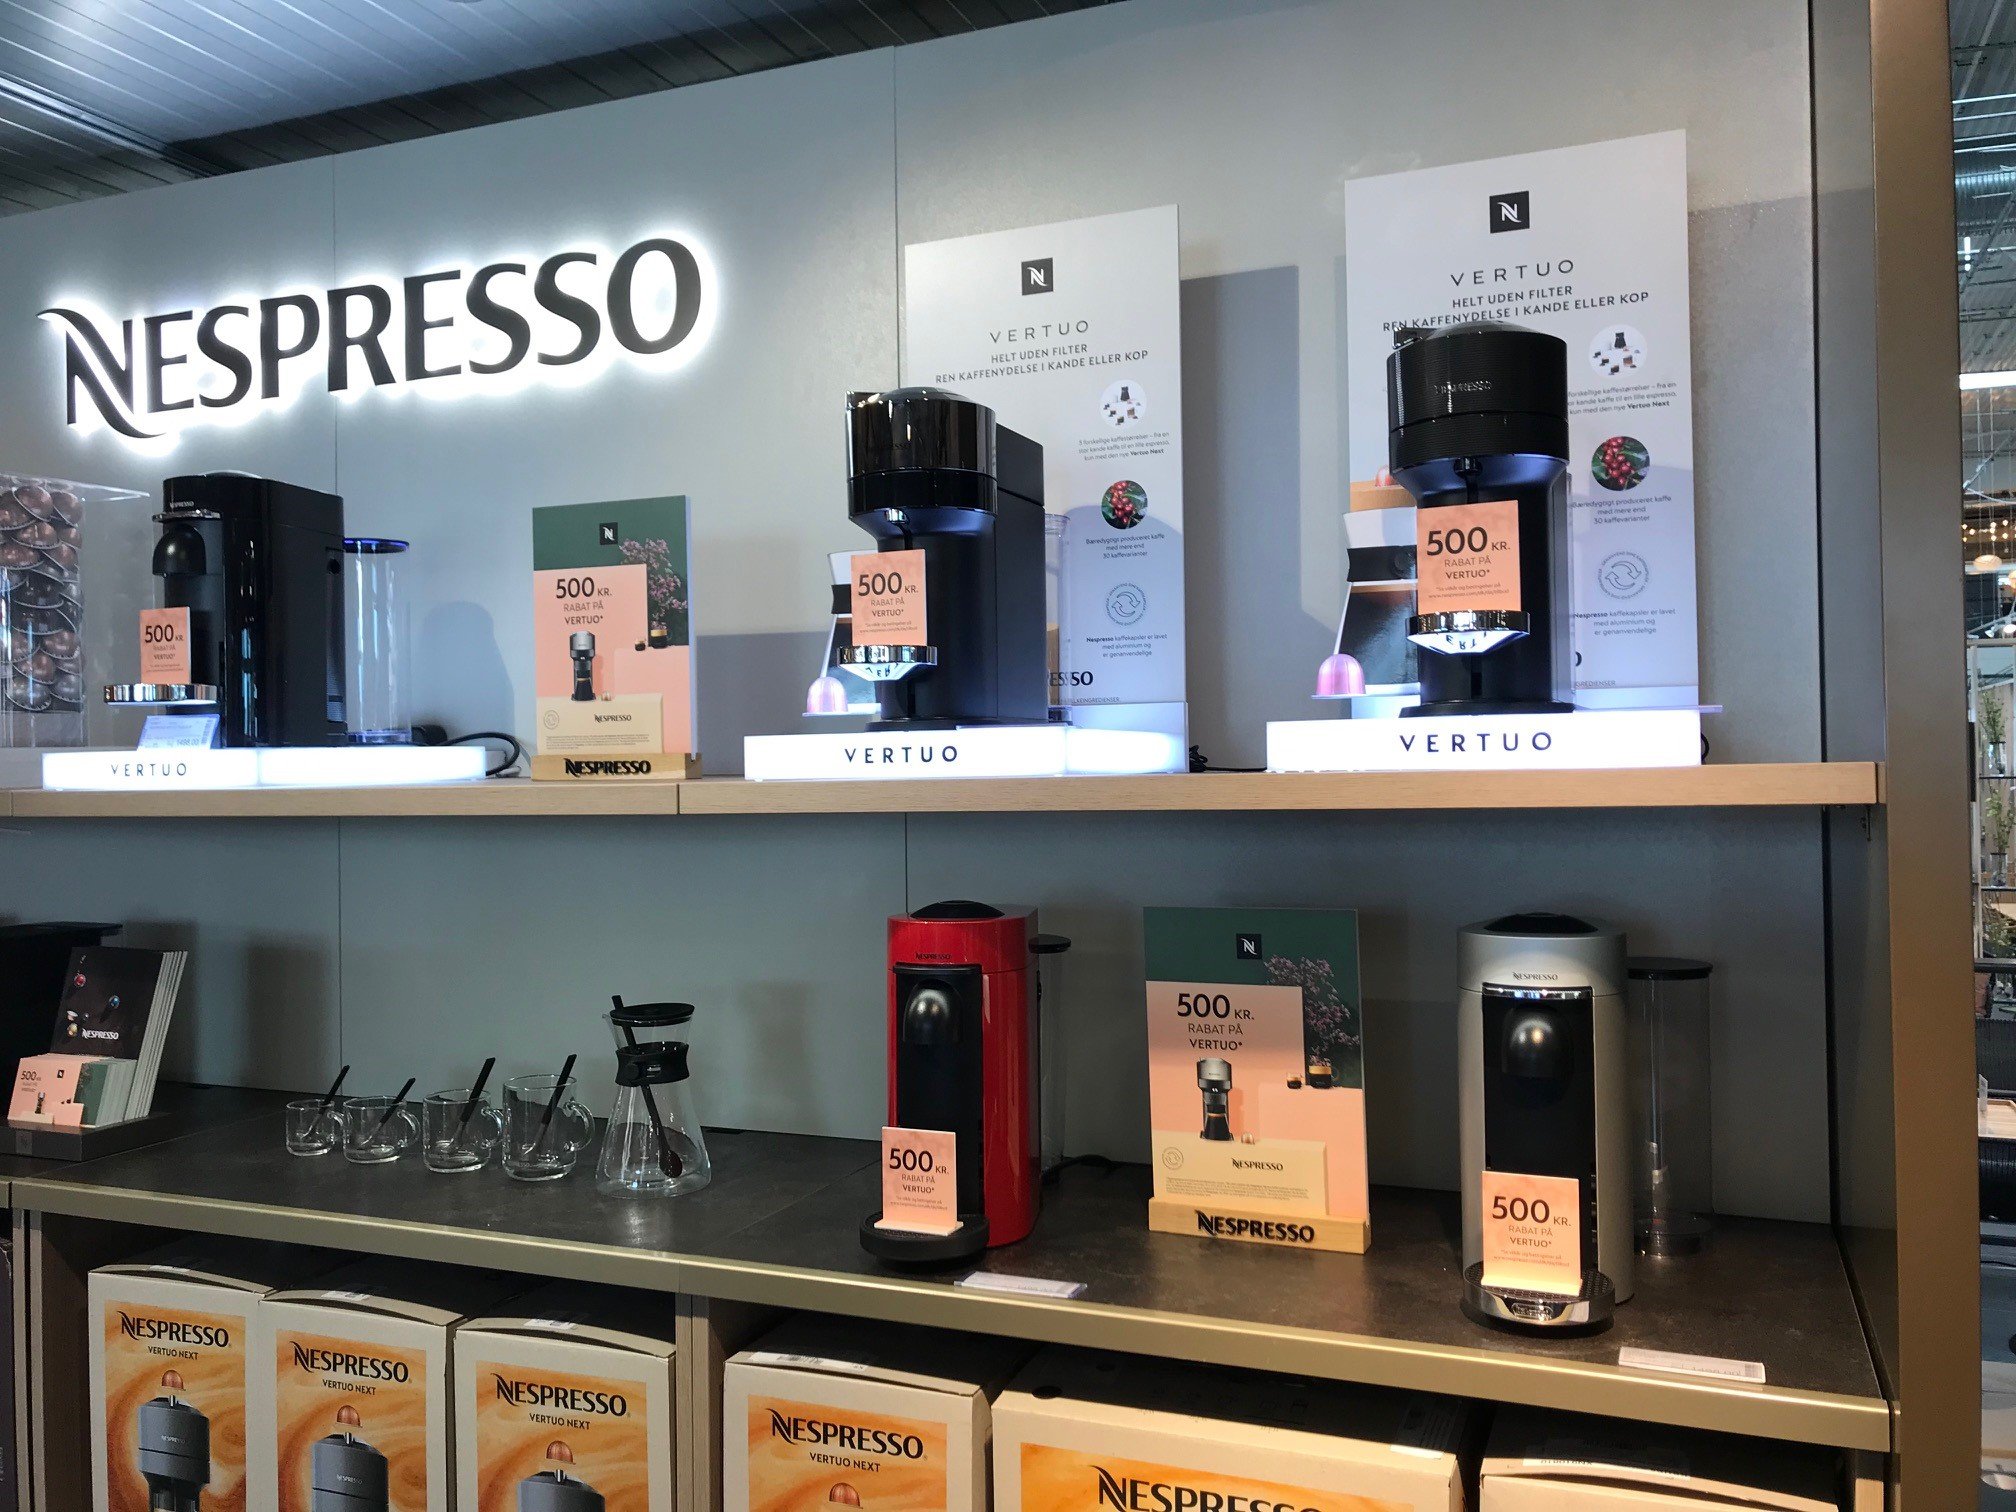 Nespresso promotags, brochures, vouchers, signs